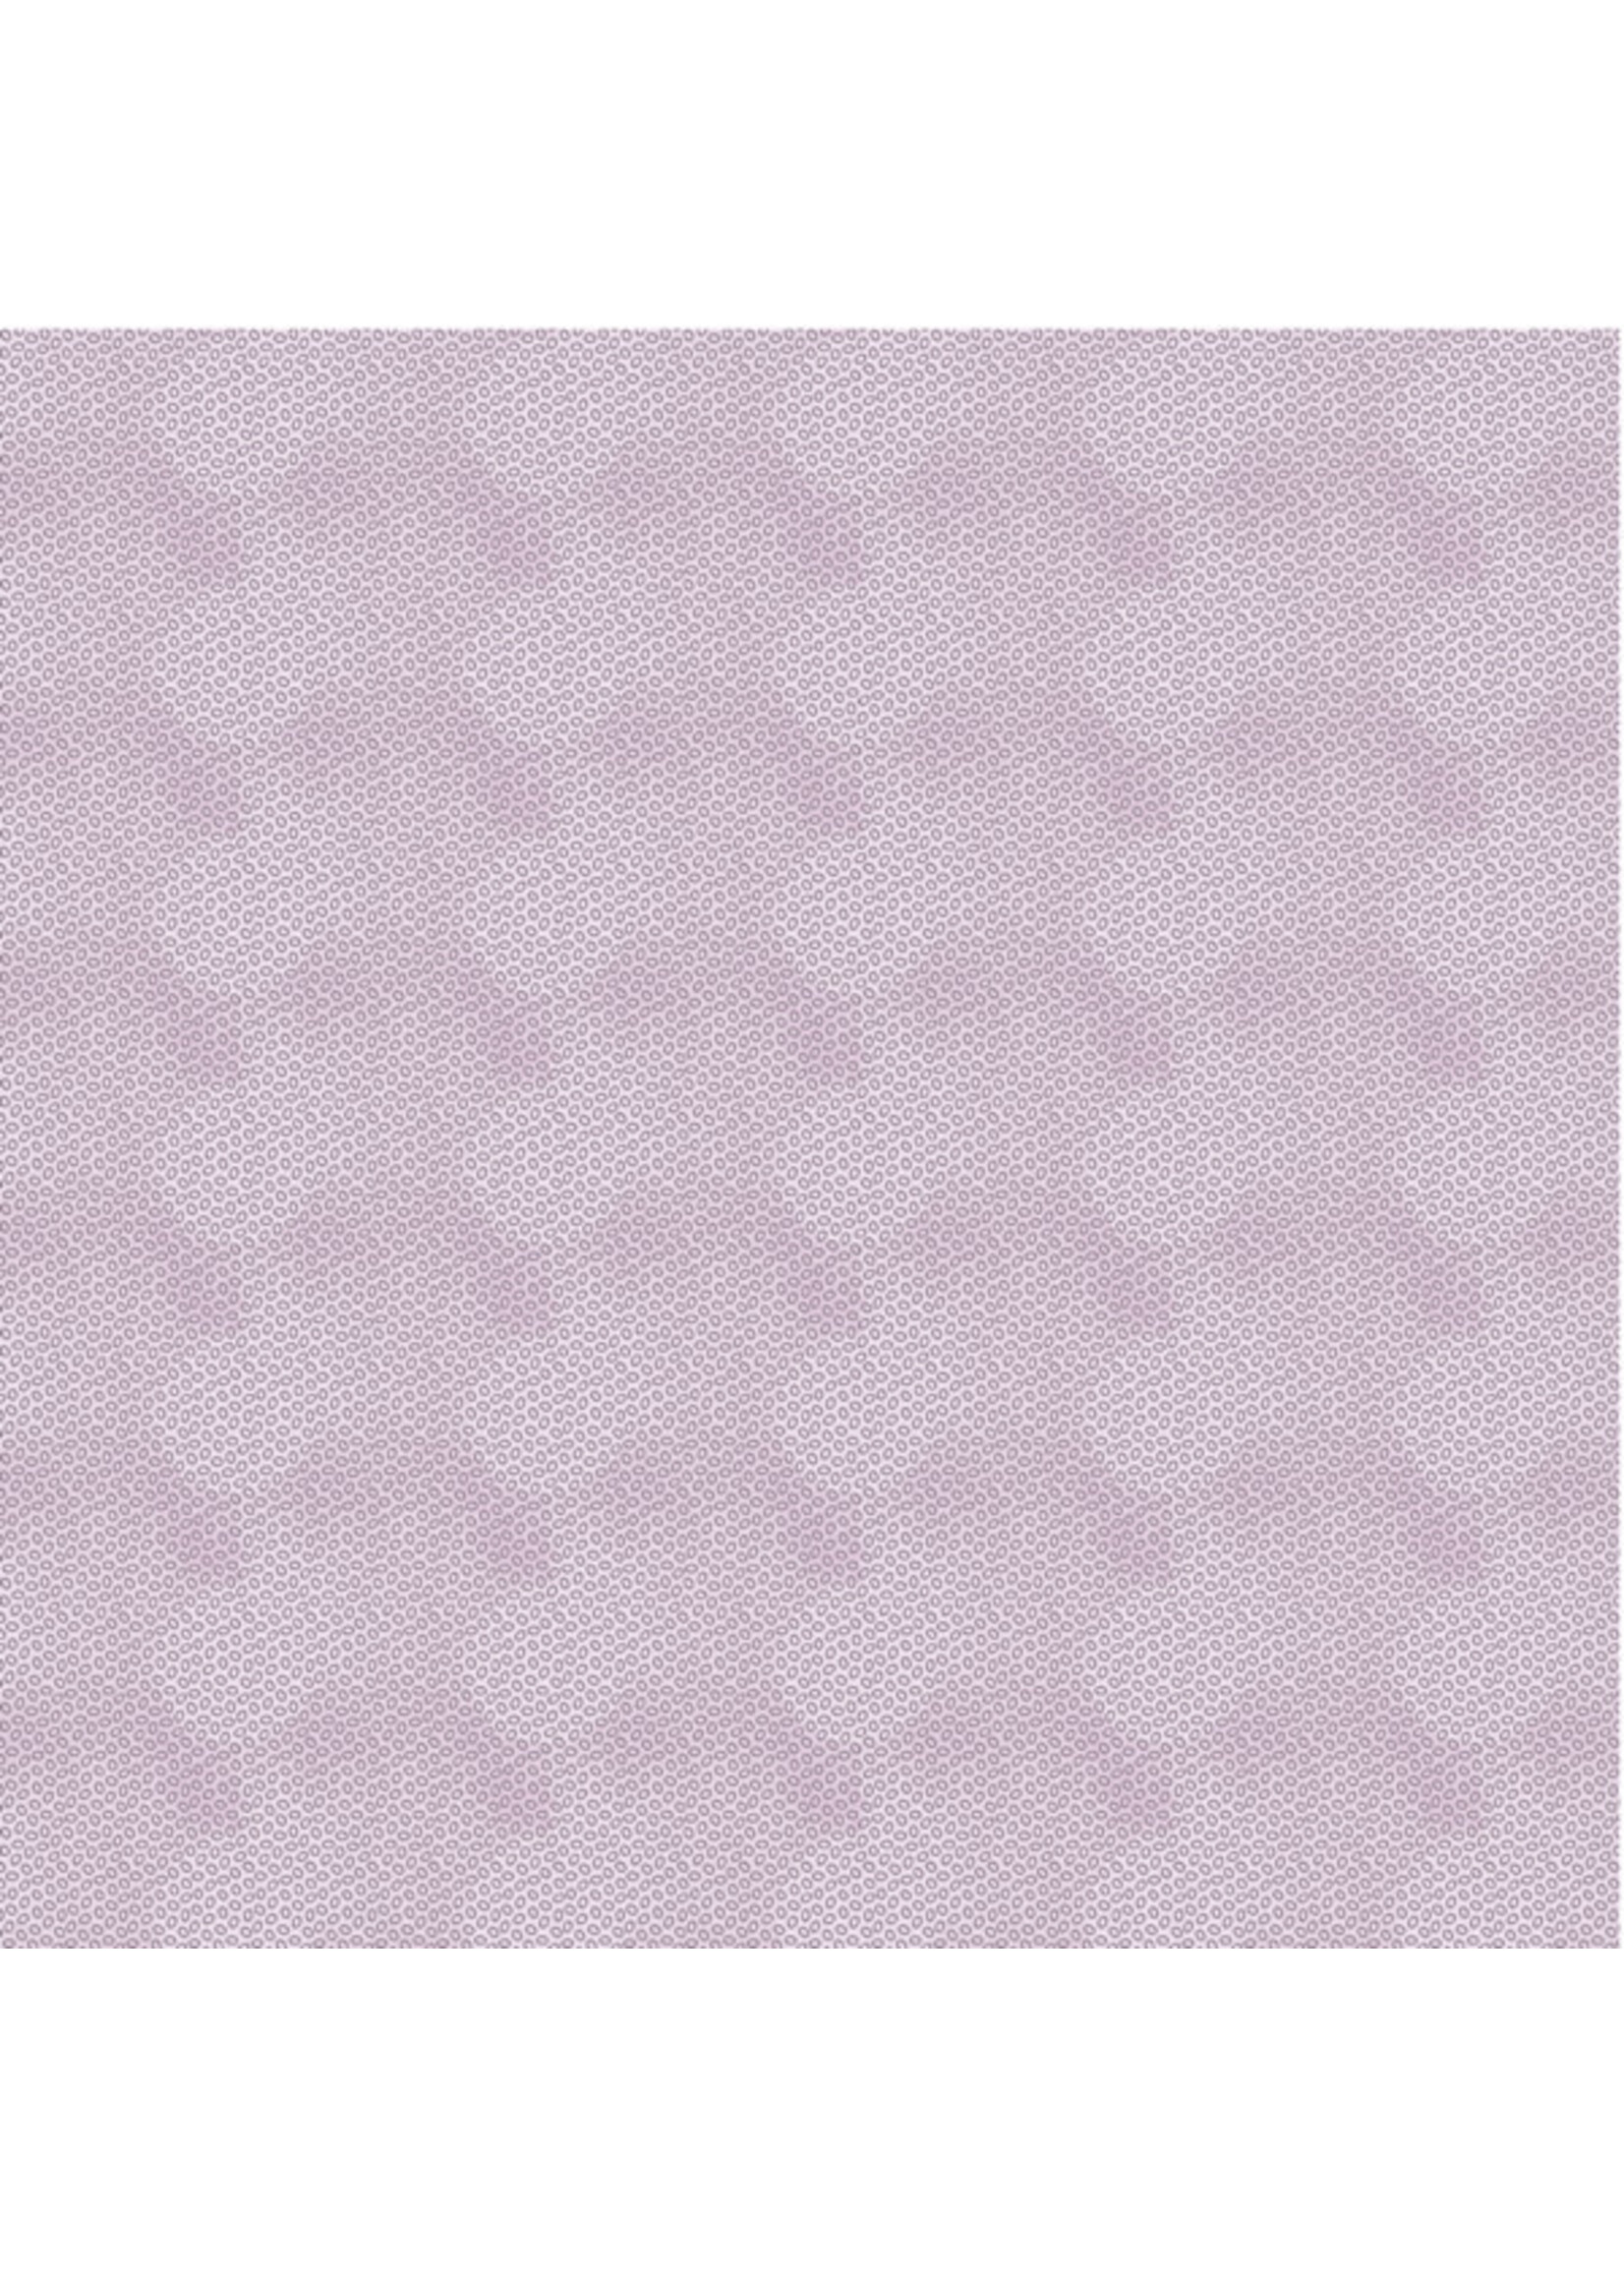 Windham Fabrics Circa Purple - Ditty Dot - Lilac - 539544